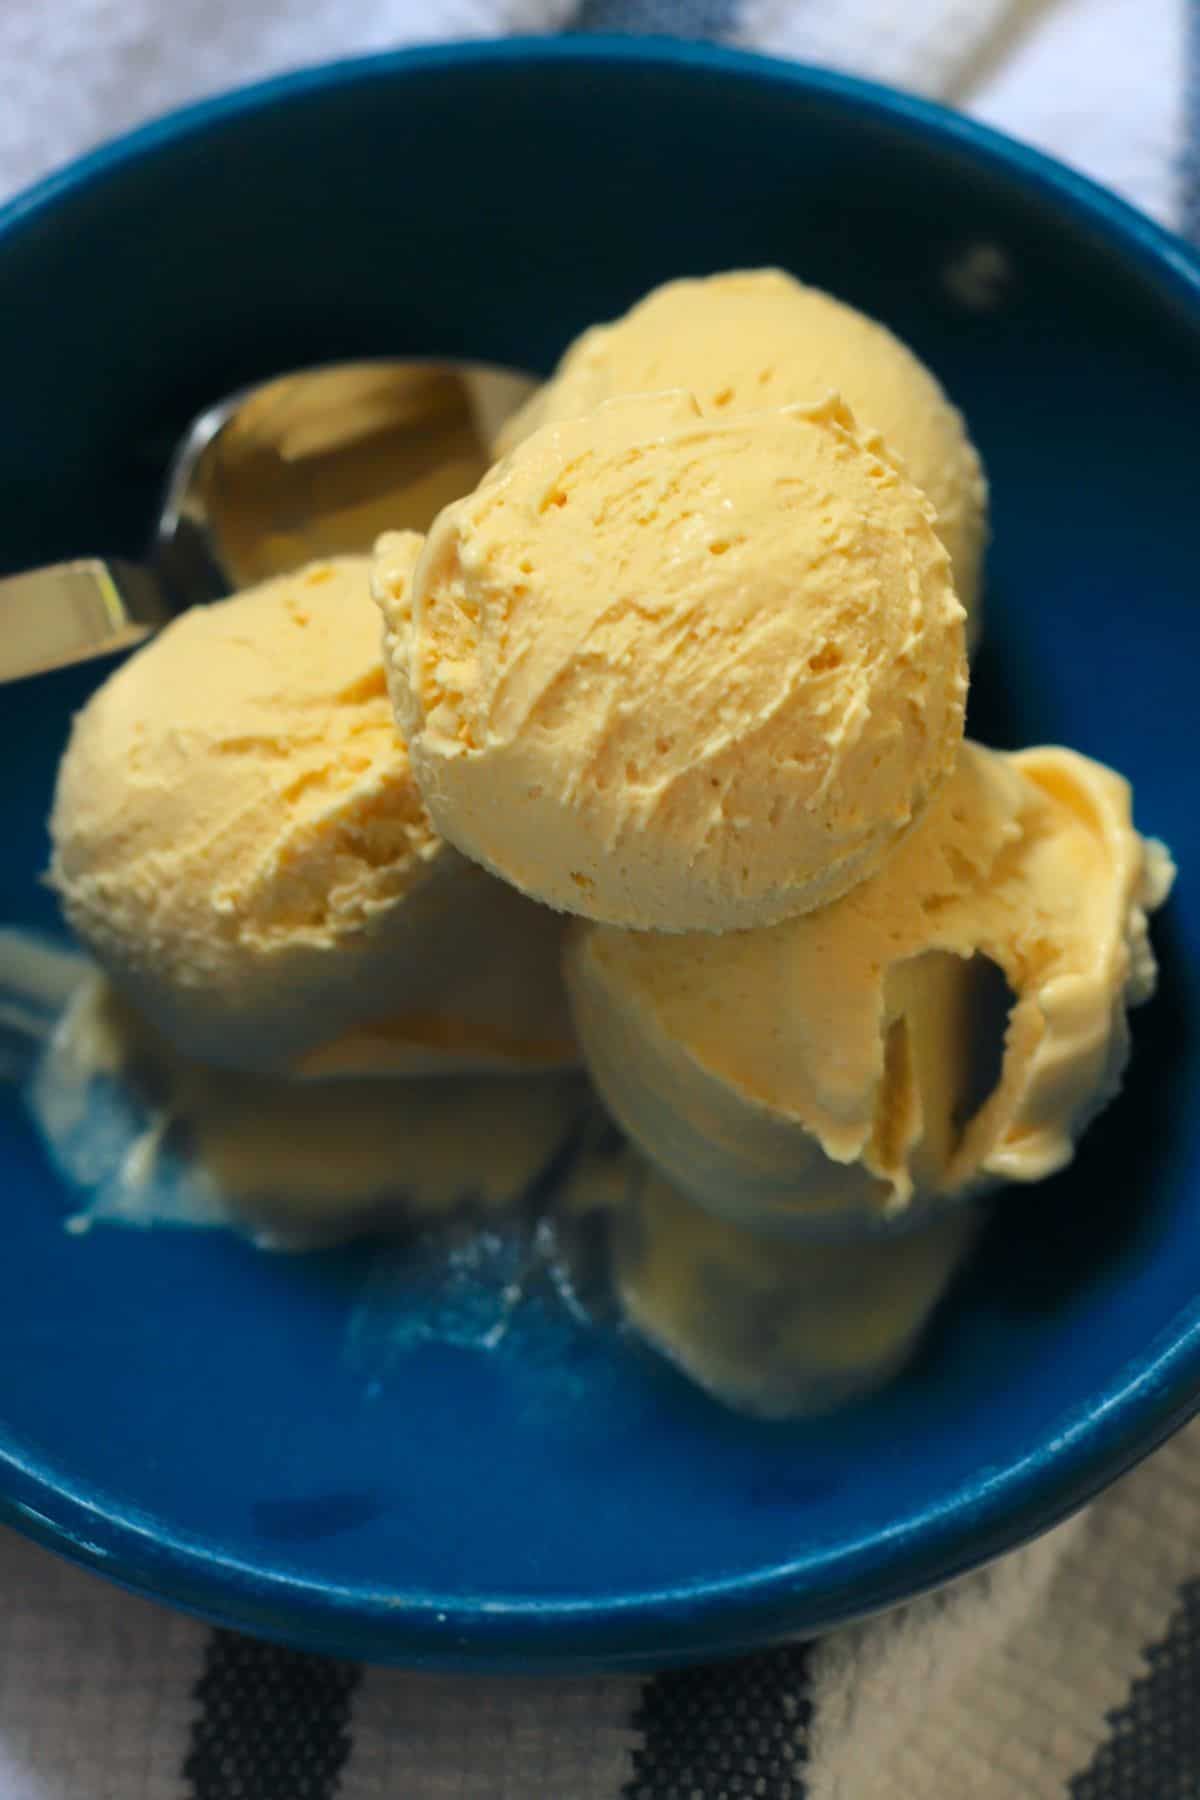 Ninja Cream Butterscotch Ice Cream in a blue bowl.